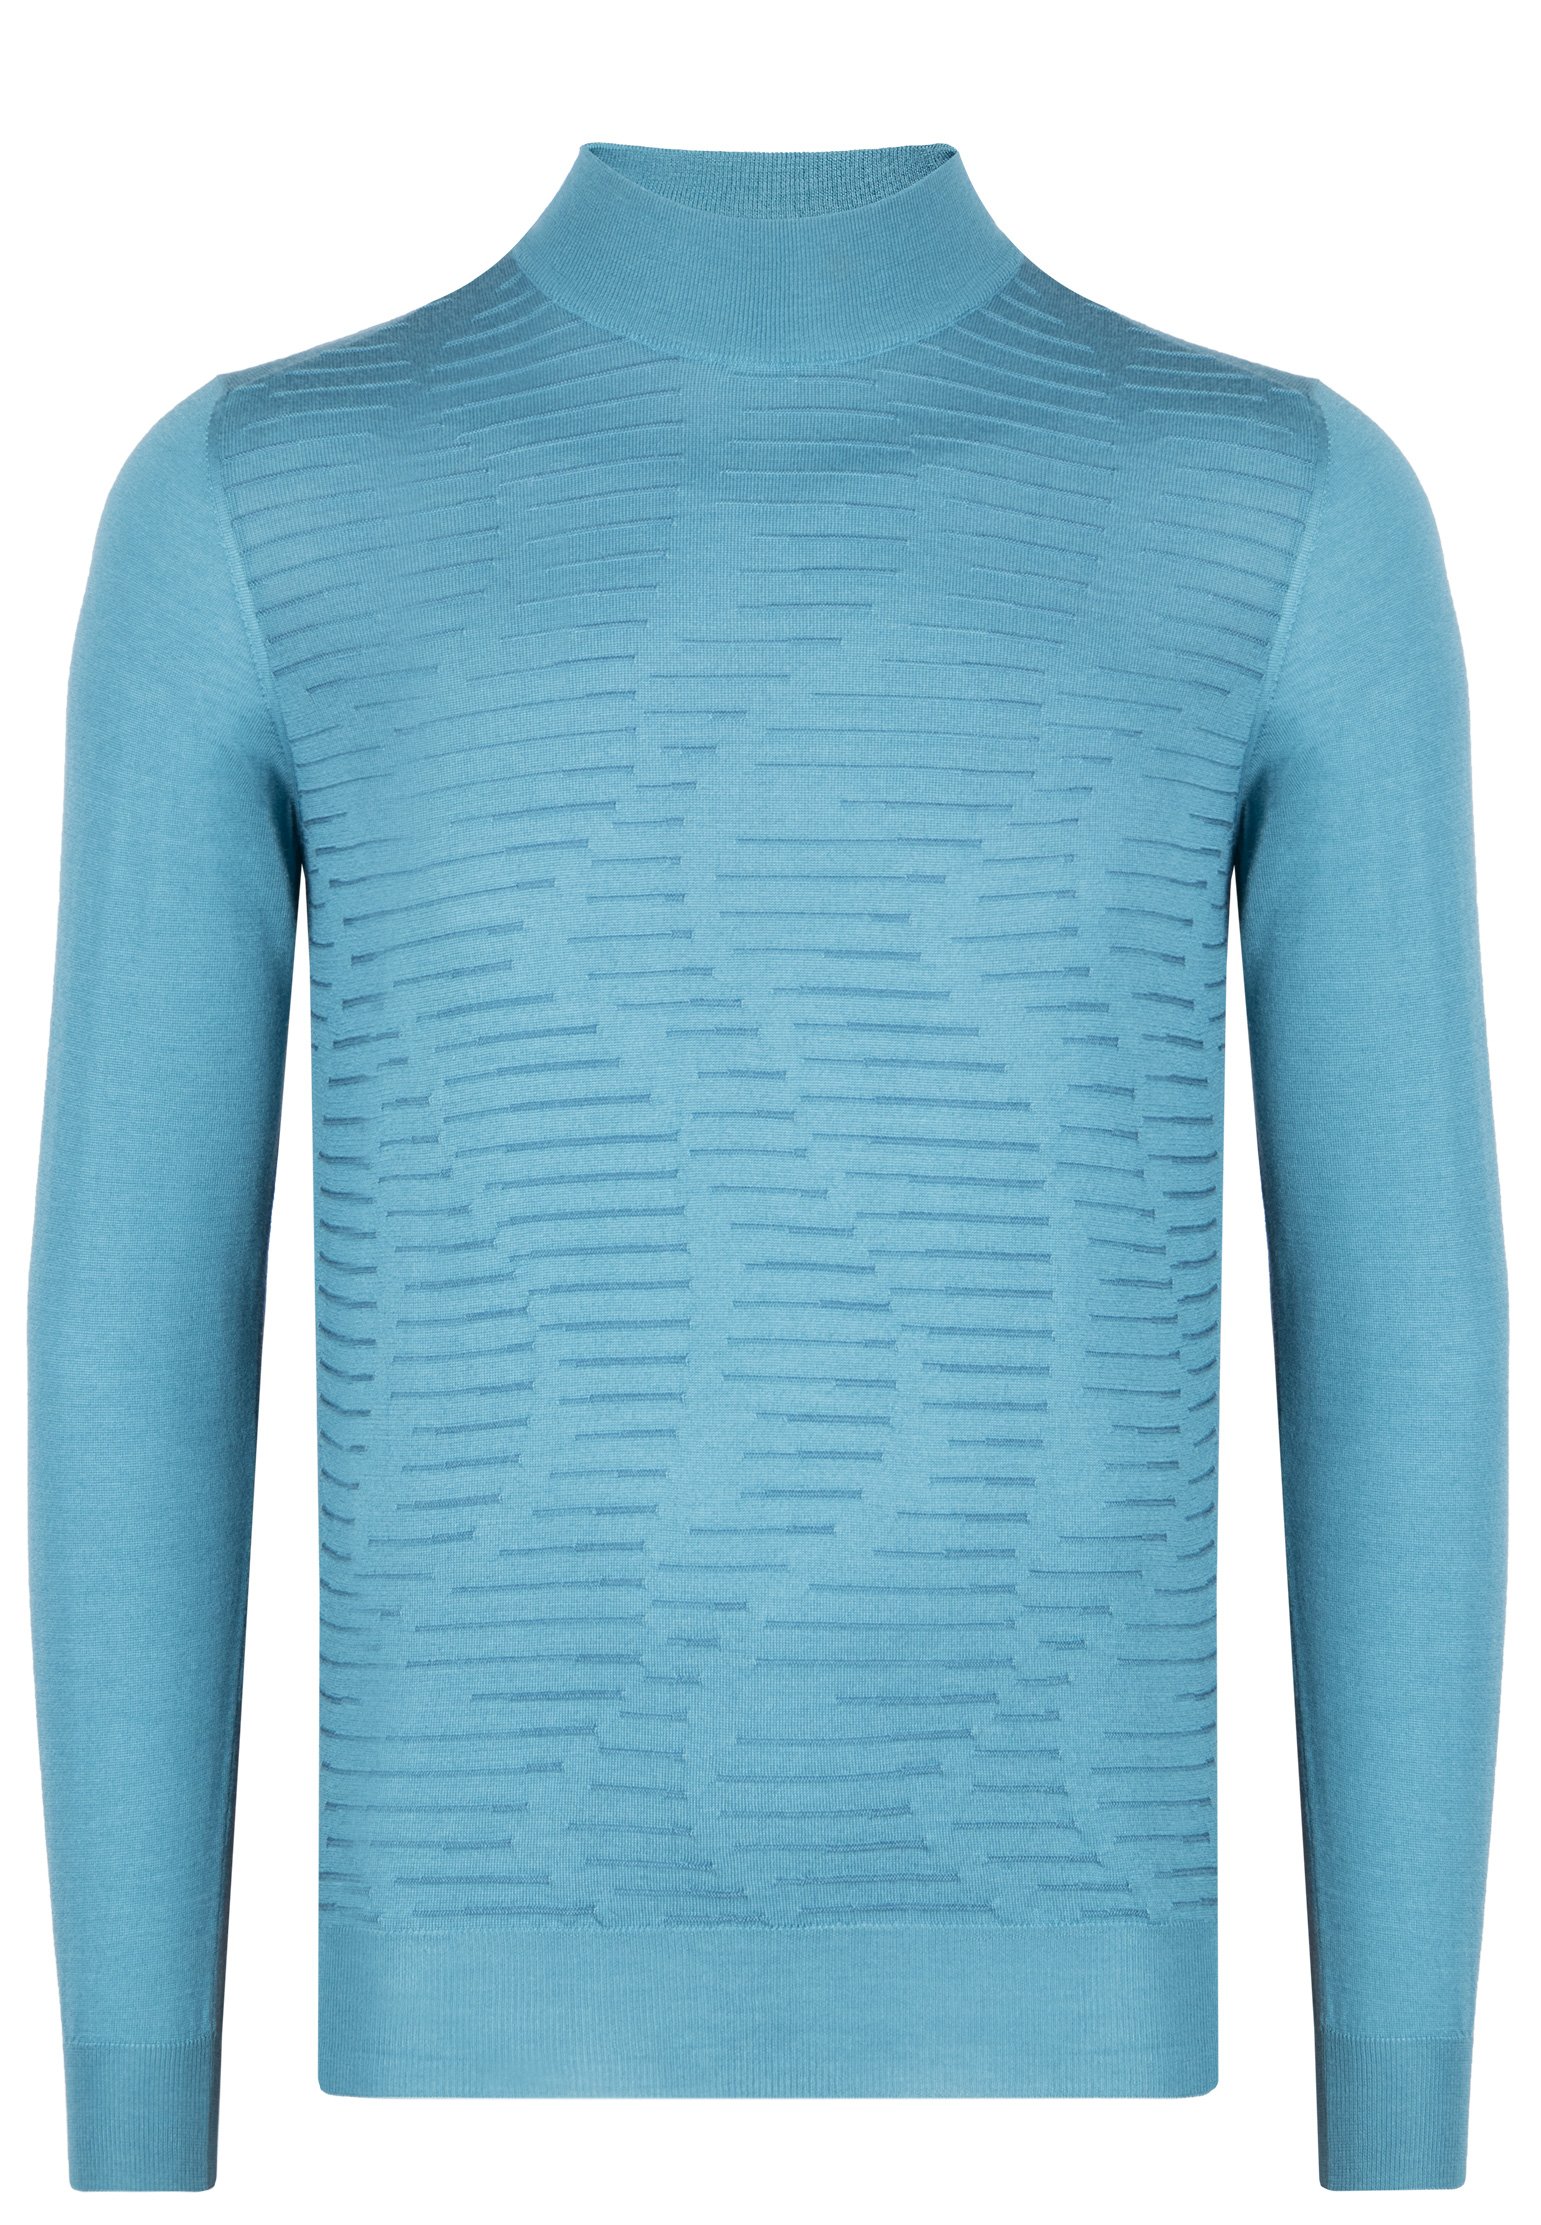 Пуловер ZILLI Голубой, размер 56 121741 - фото 1